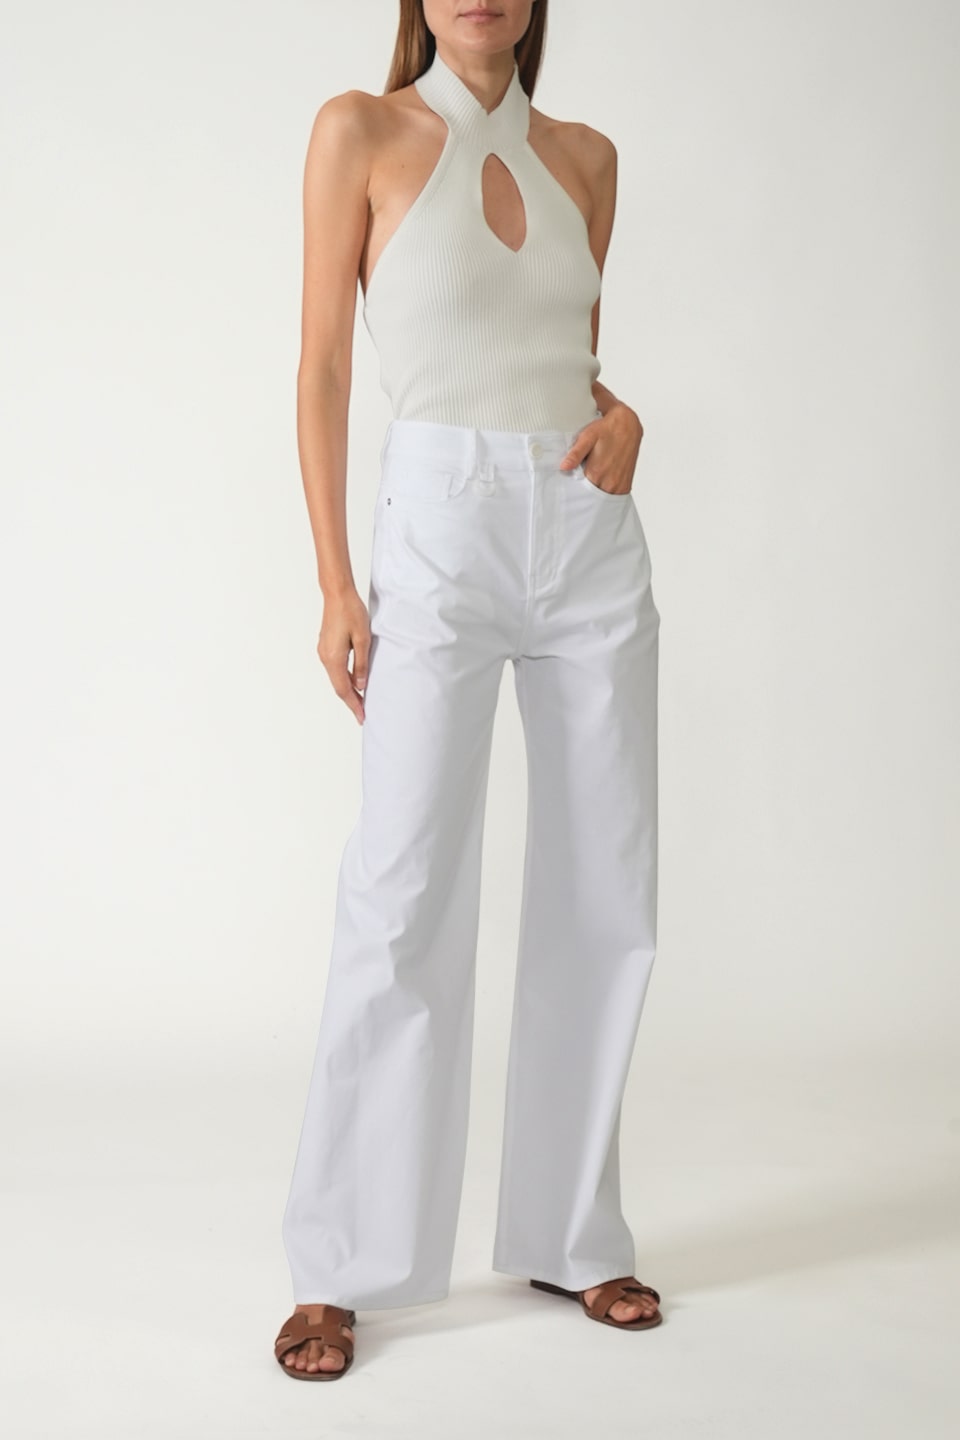 Shop online trendy White Women pants from Vivetta Fashion designer. Product gallery 1